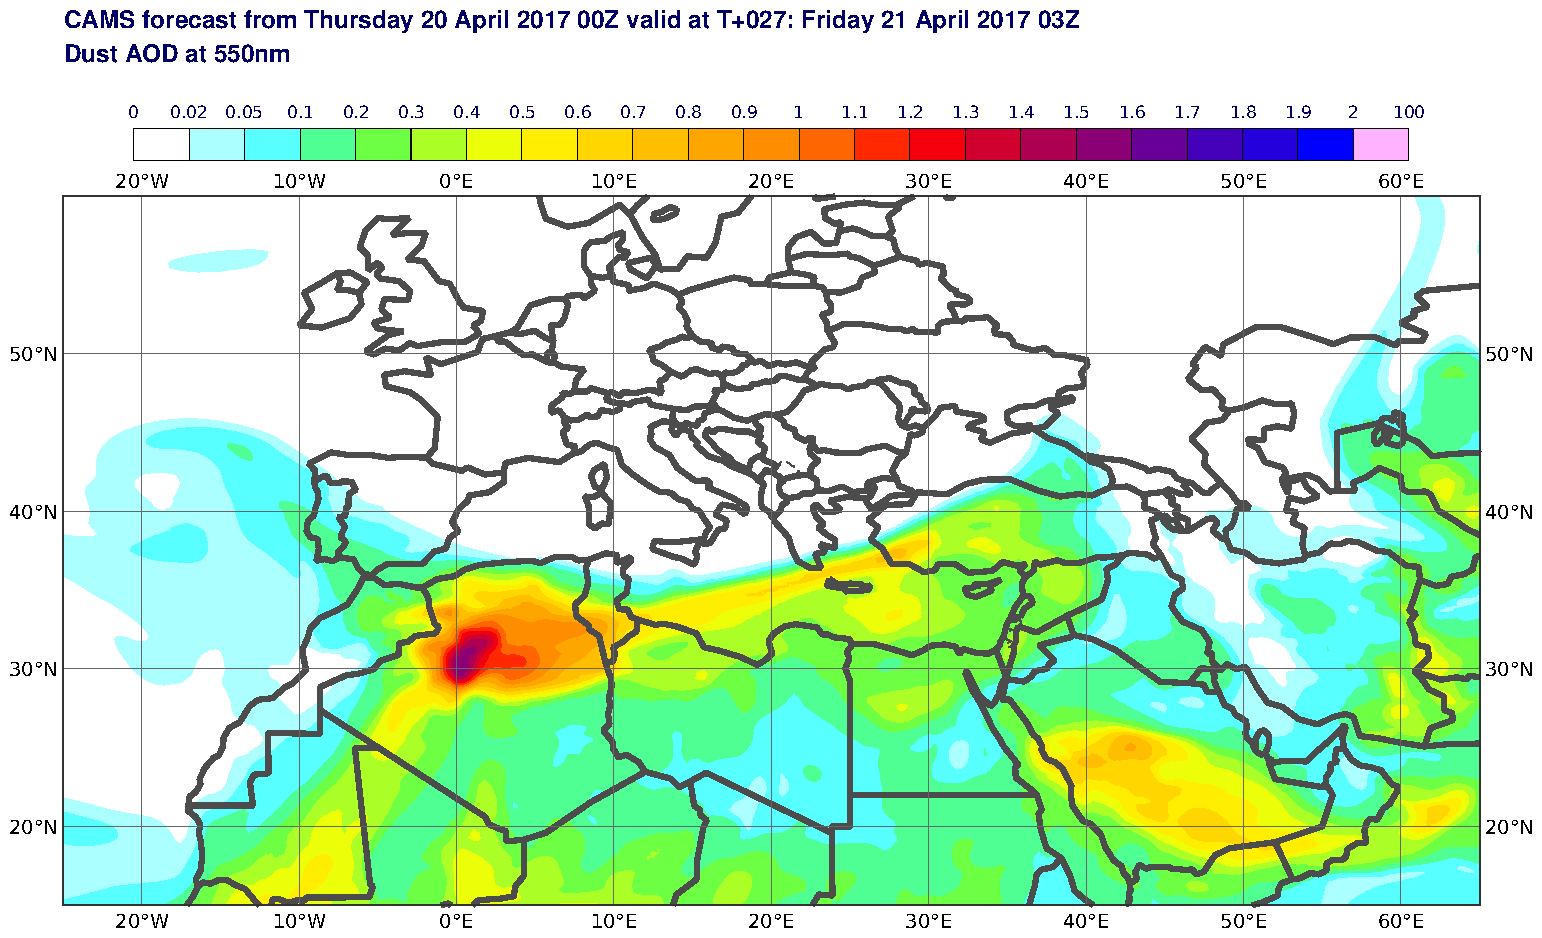 Dust AOD at 550nm valid at T27 - 2017-04-21 03:00